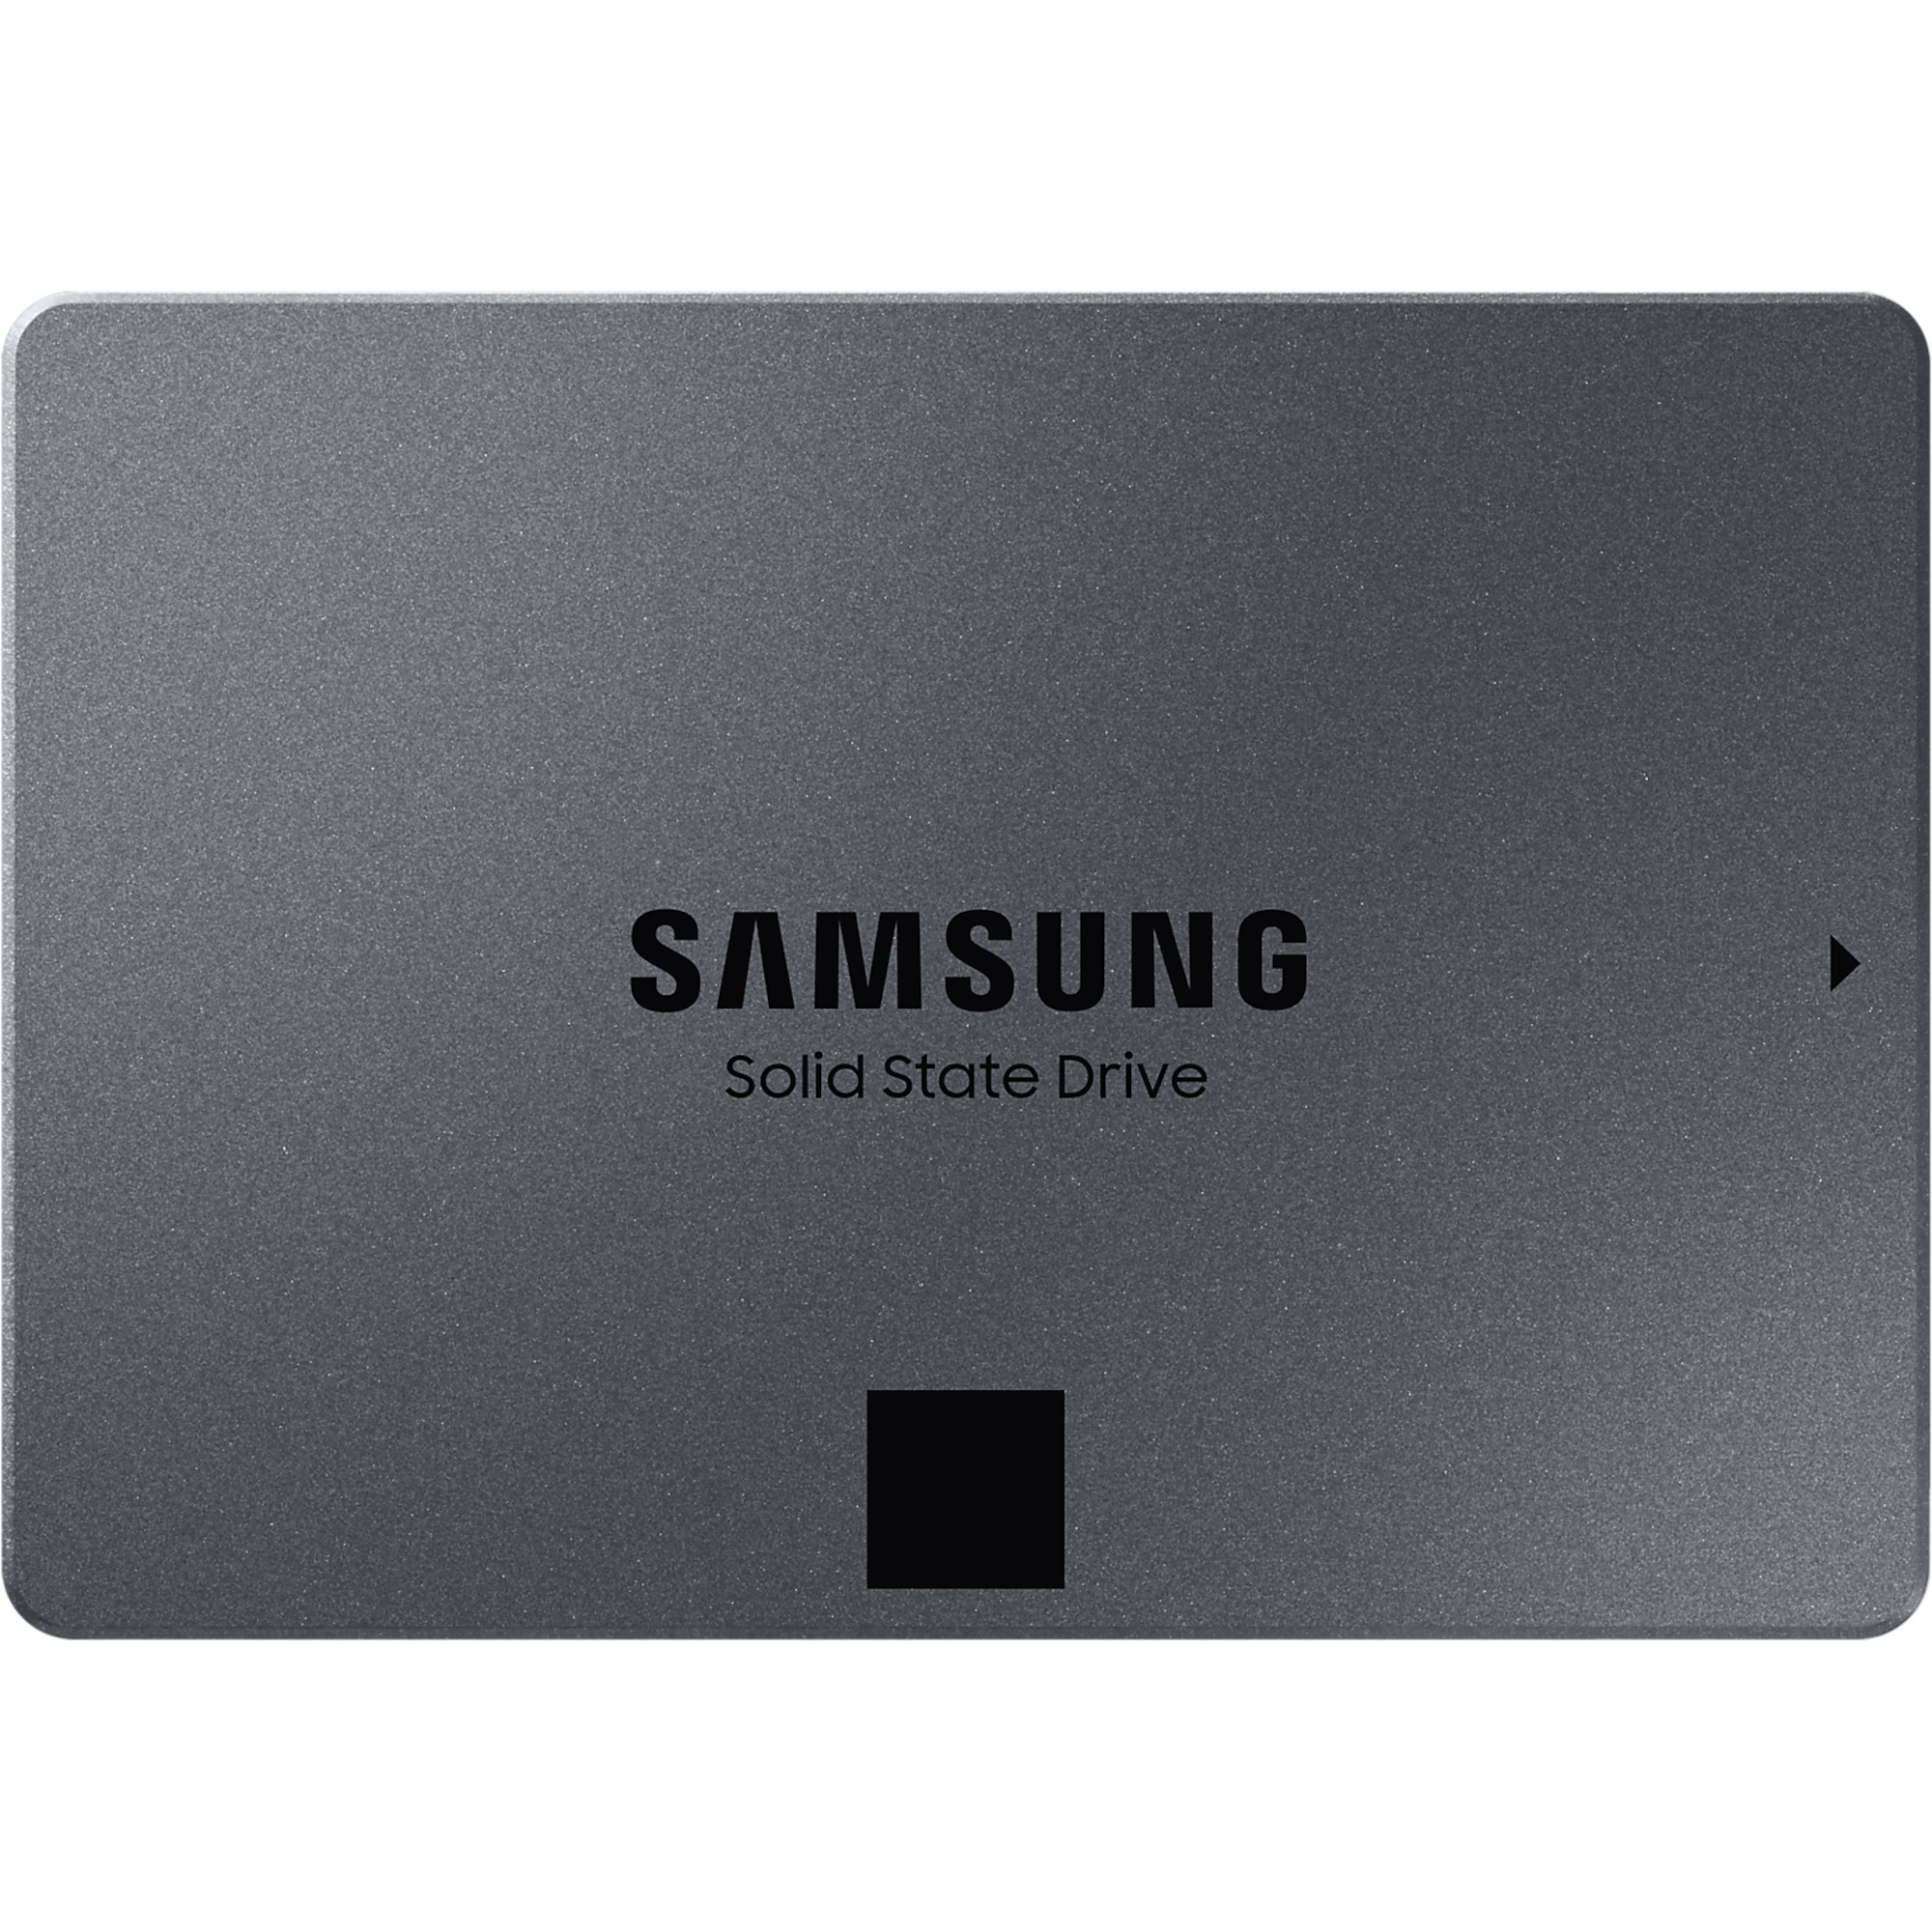 Solid-State Drive (SSD) Samsung 870 QVO, 2 TB, 2.5